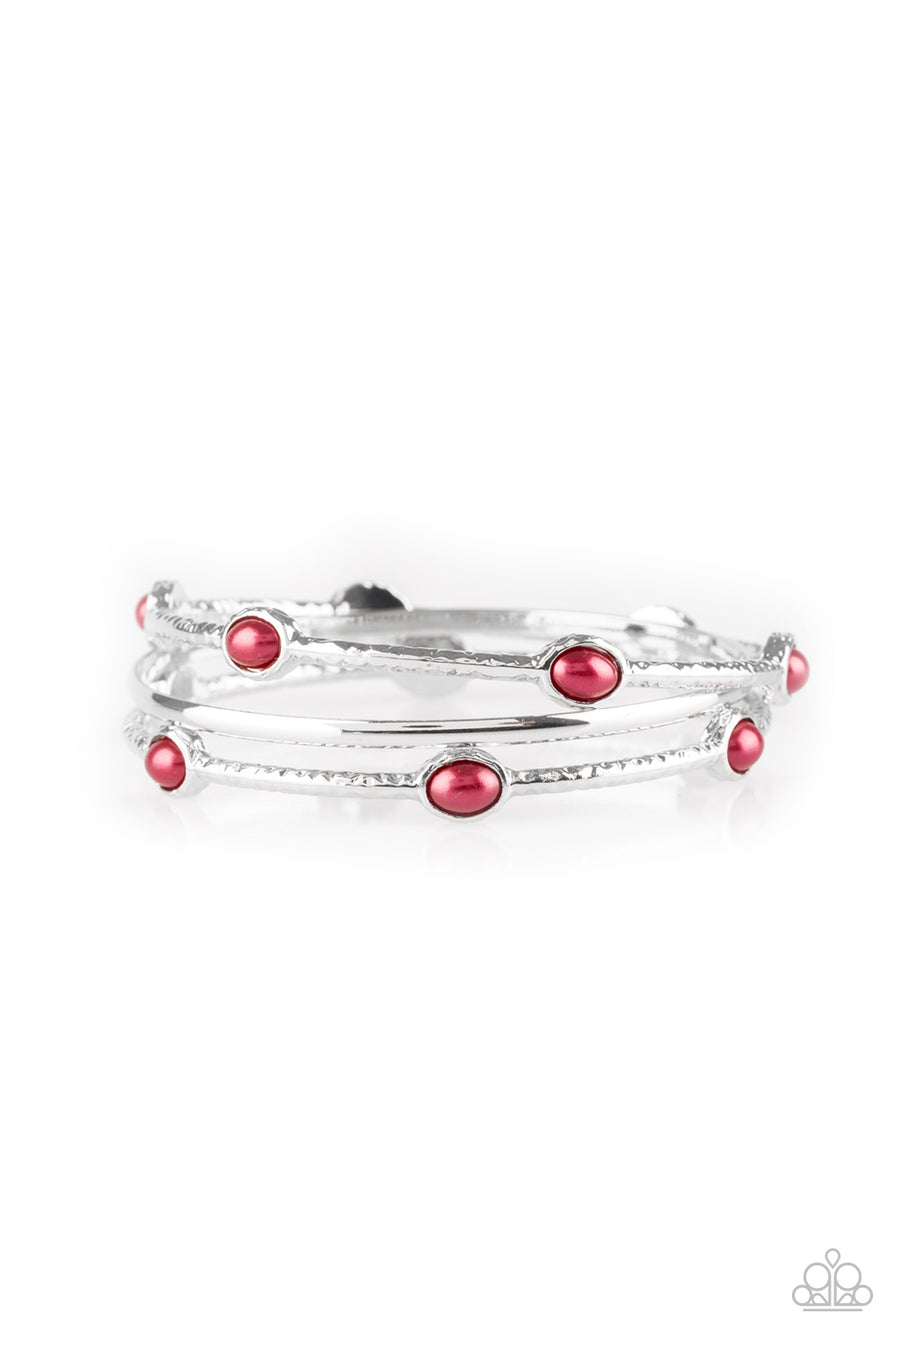 Bangle Belle - Red Bangle Bracelet - Paparazzi Accessories